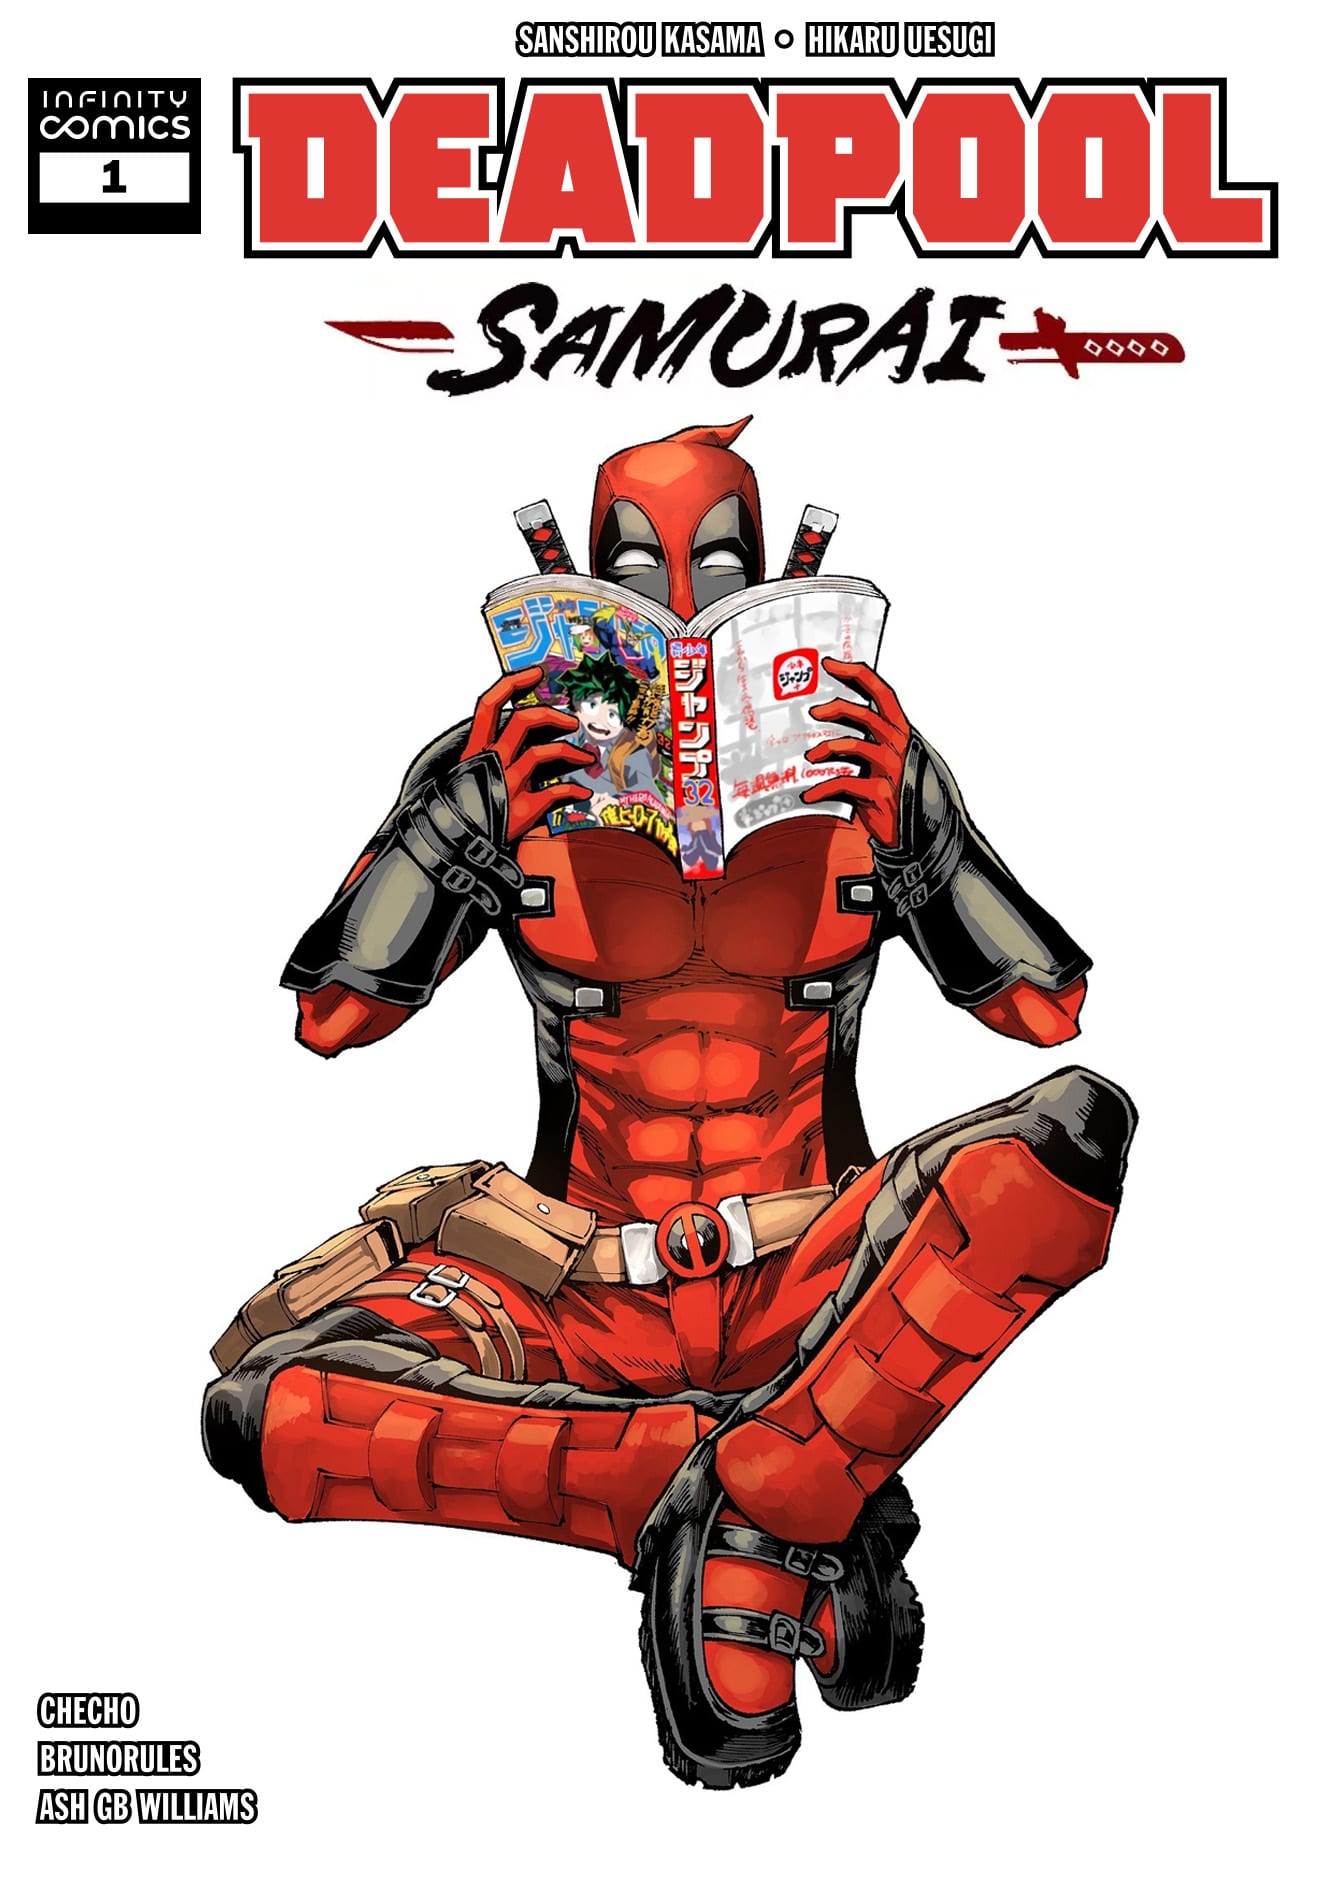 Manga completo Deadpool: Samurai